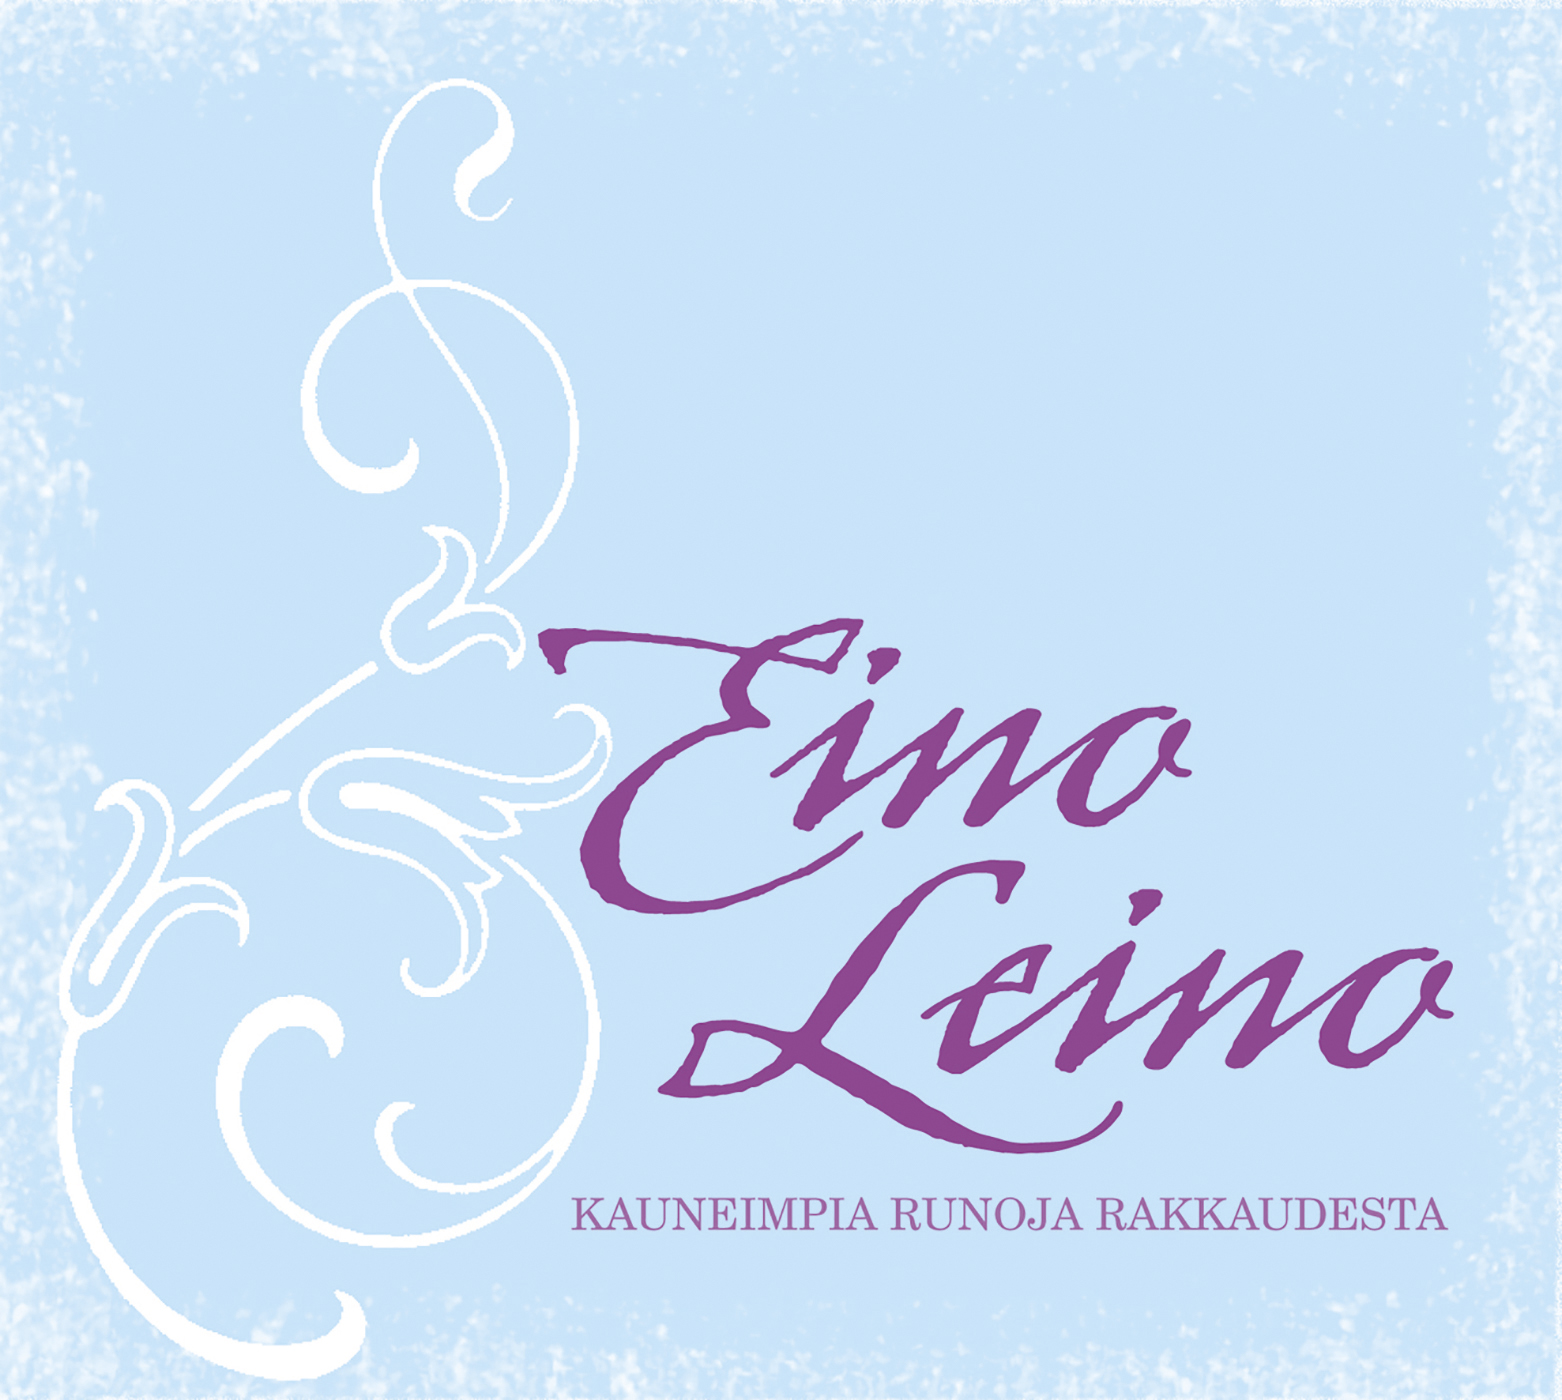 Leino, Eino - Kauneimpia runoja rakkaudesta, audiobook